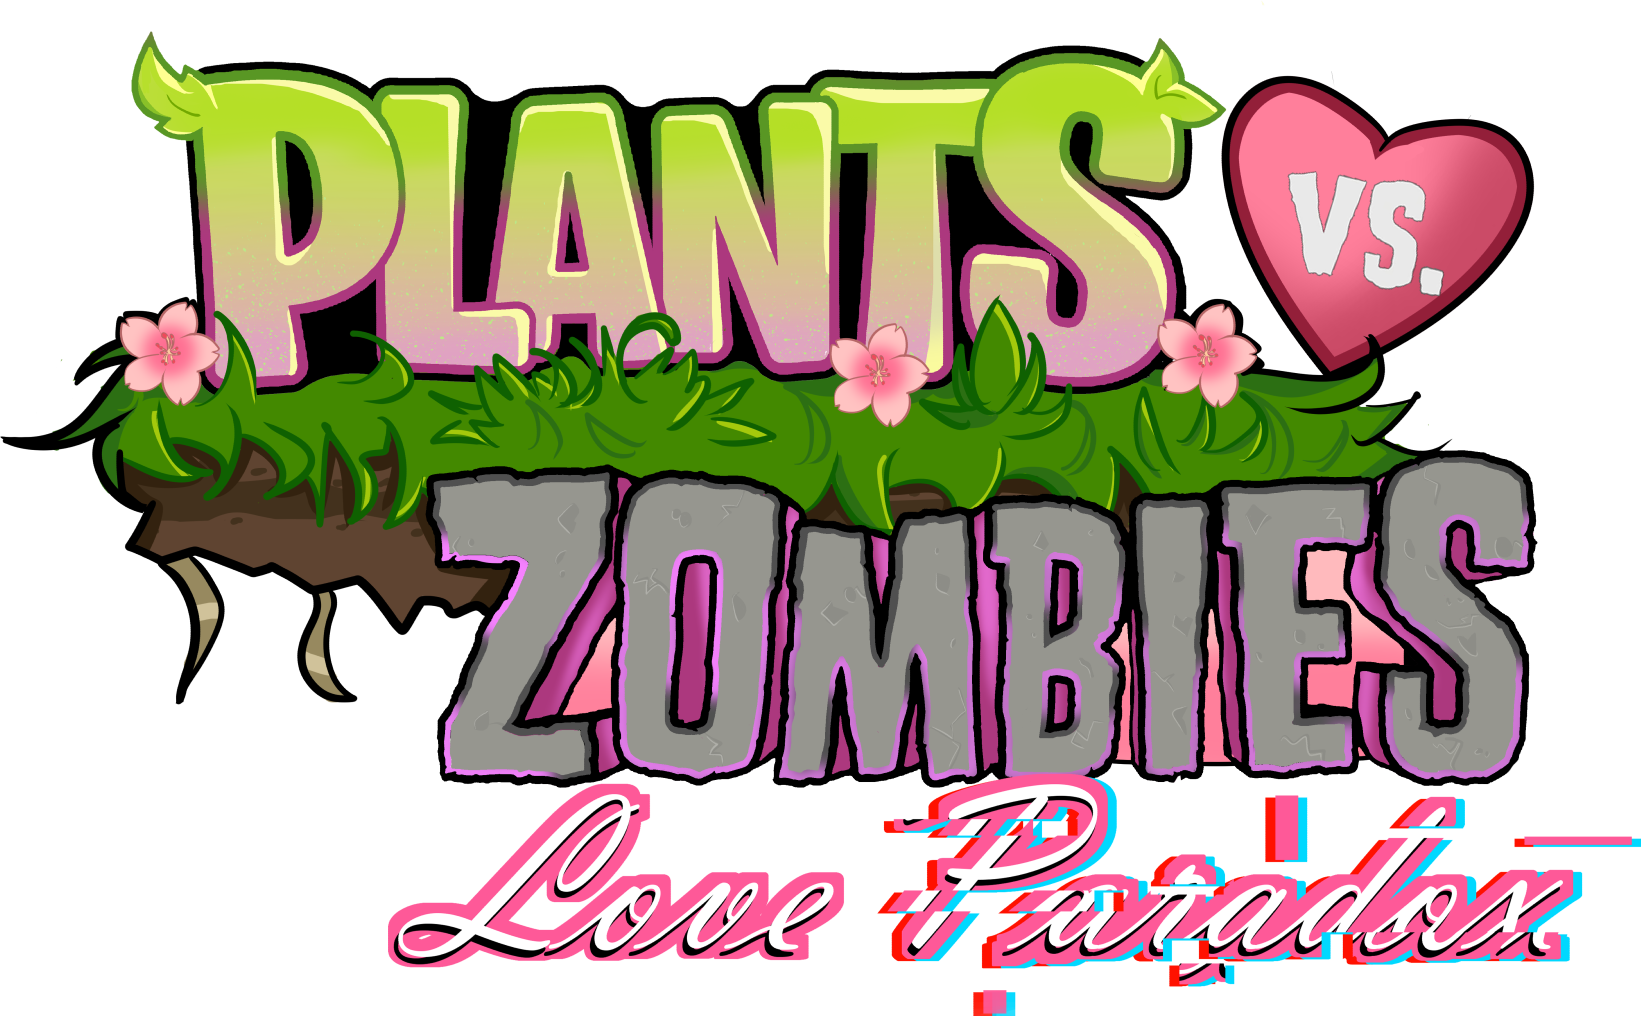 Love The Fun Zombies Of Plants Vs Zombies Zombie Birthday - Plants